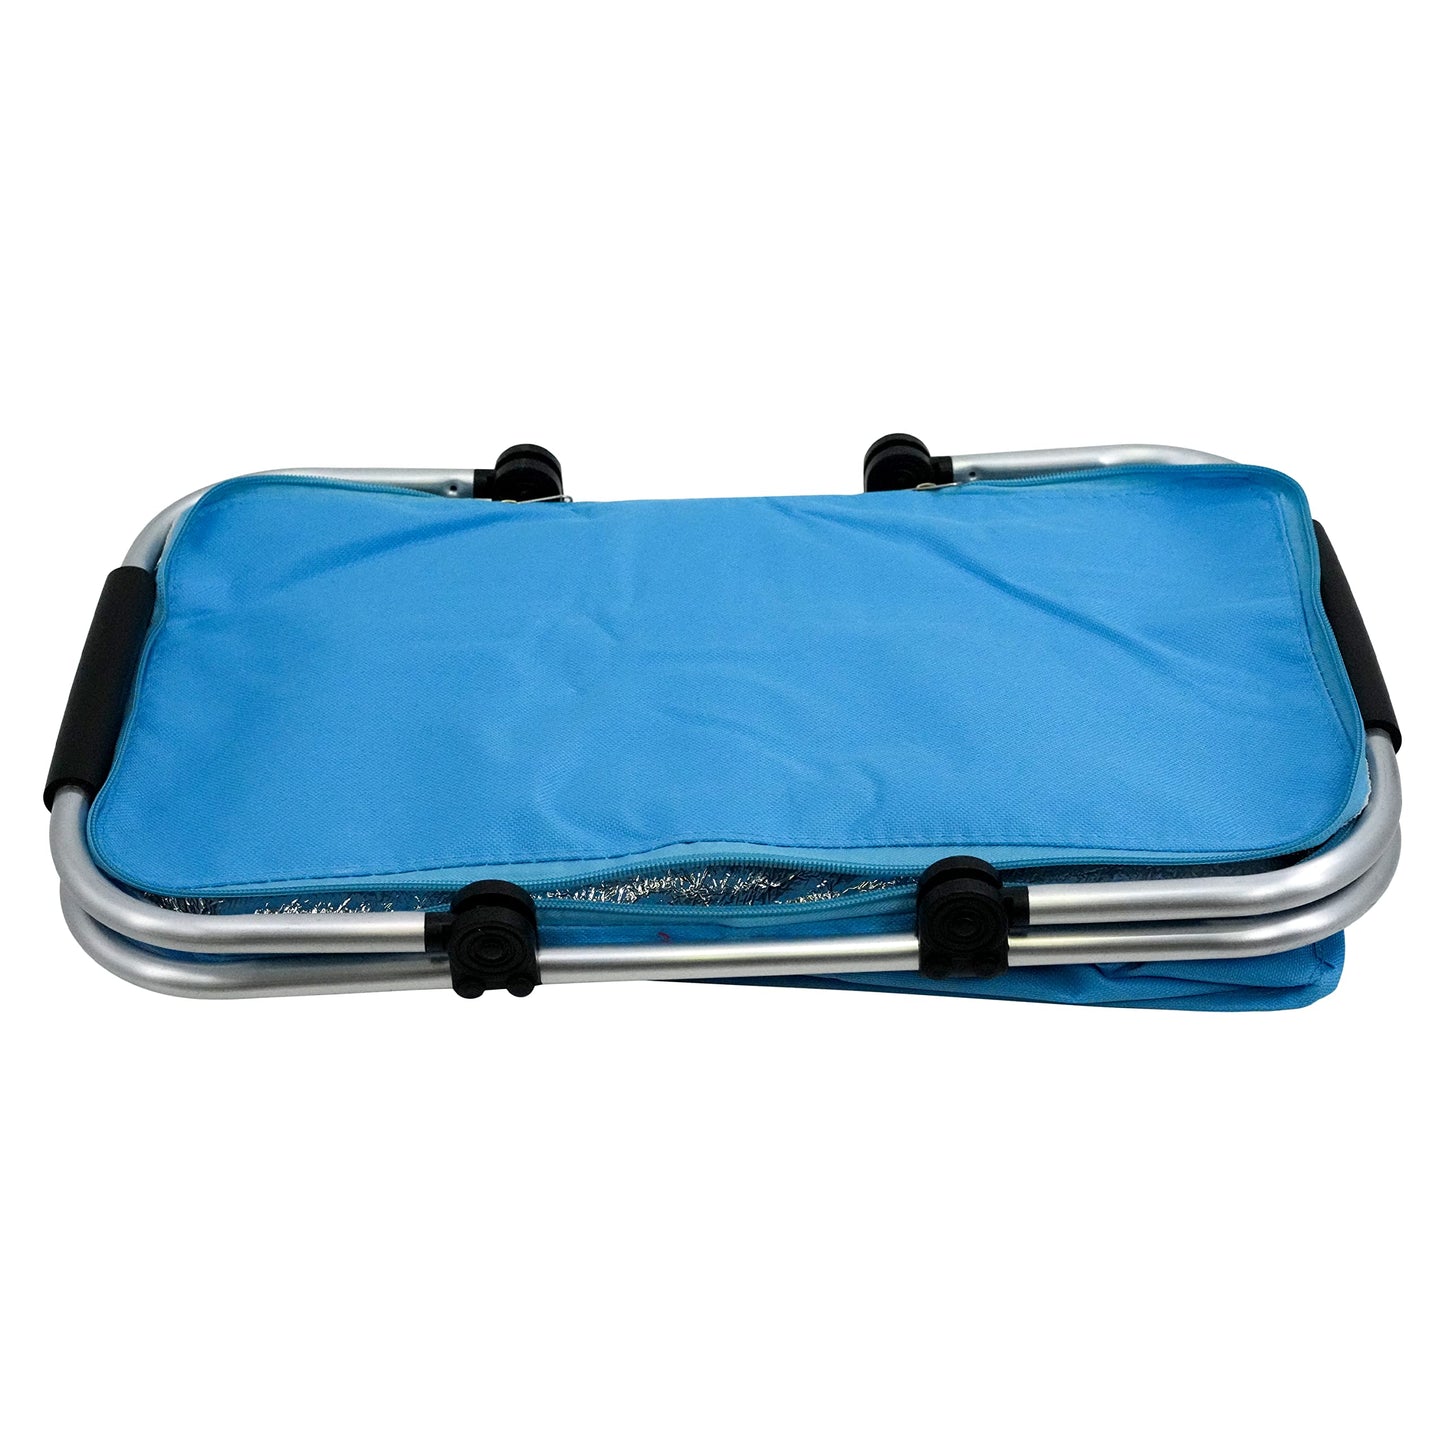 GEEZY 35 Litre Insulated Folding Picnic Camping Cooler Basket Shopping Cool Hamper Bag